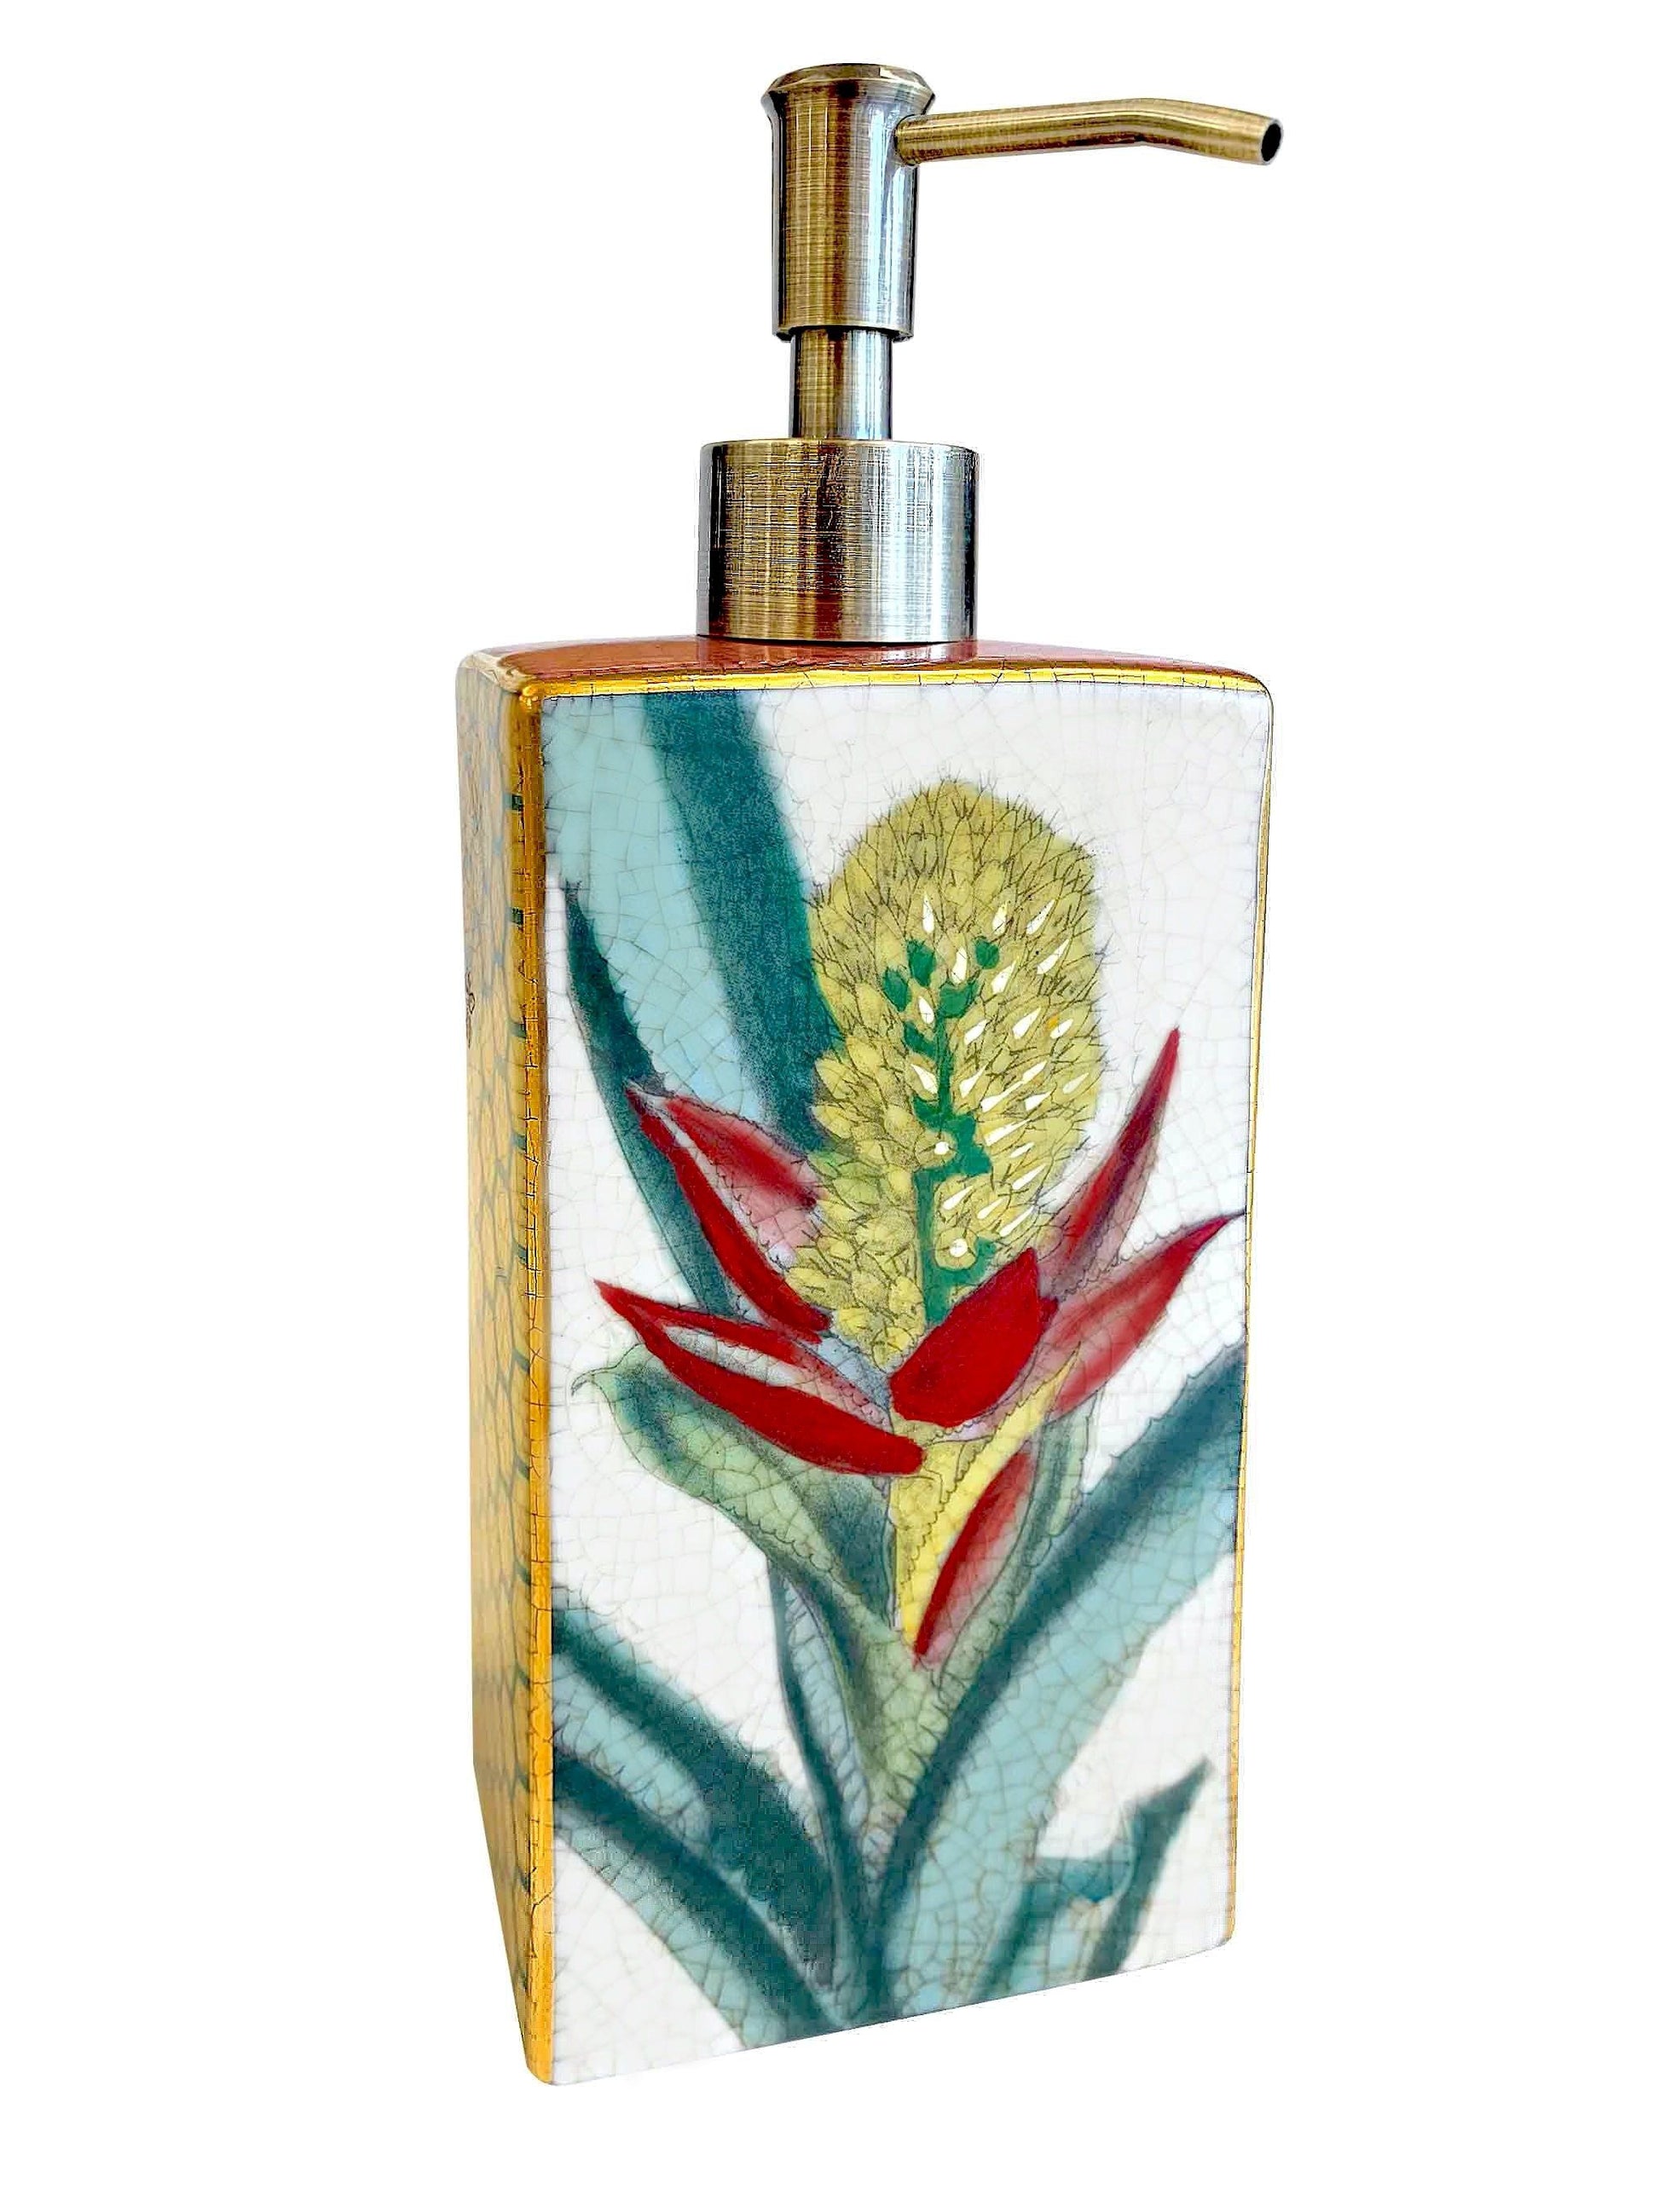 Luxury Porcelain Soap Dispenser Palacio with Bromeliad Flower by C.A.M 22cm